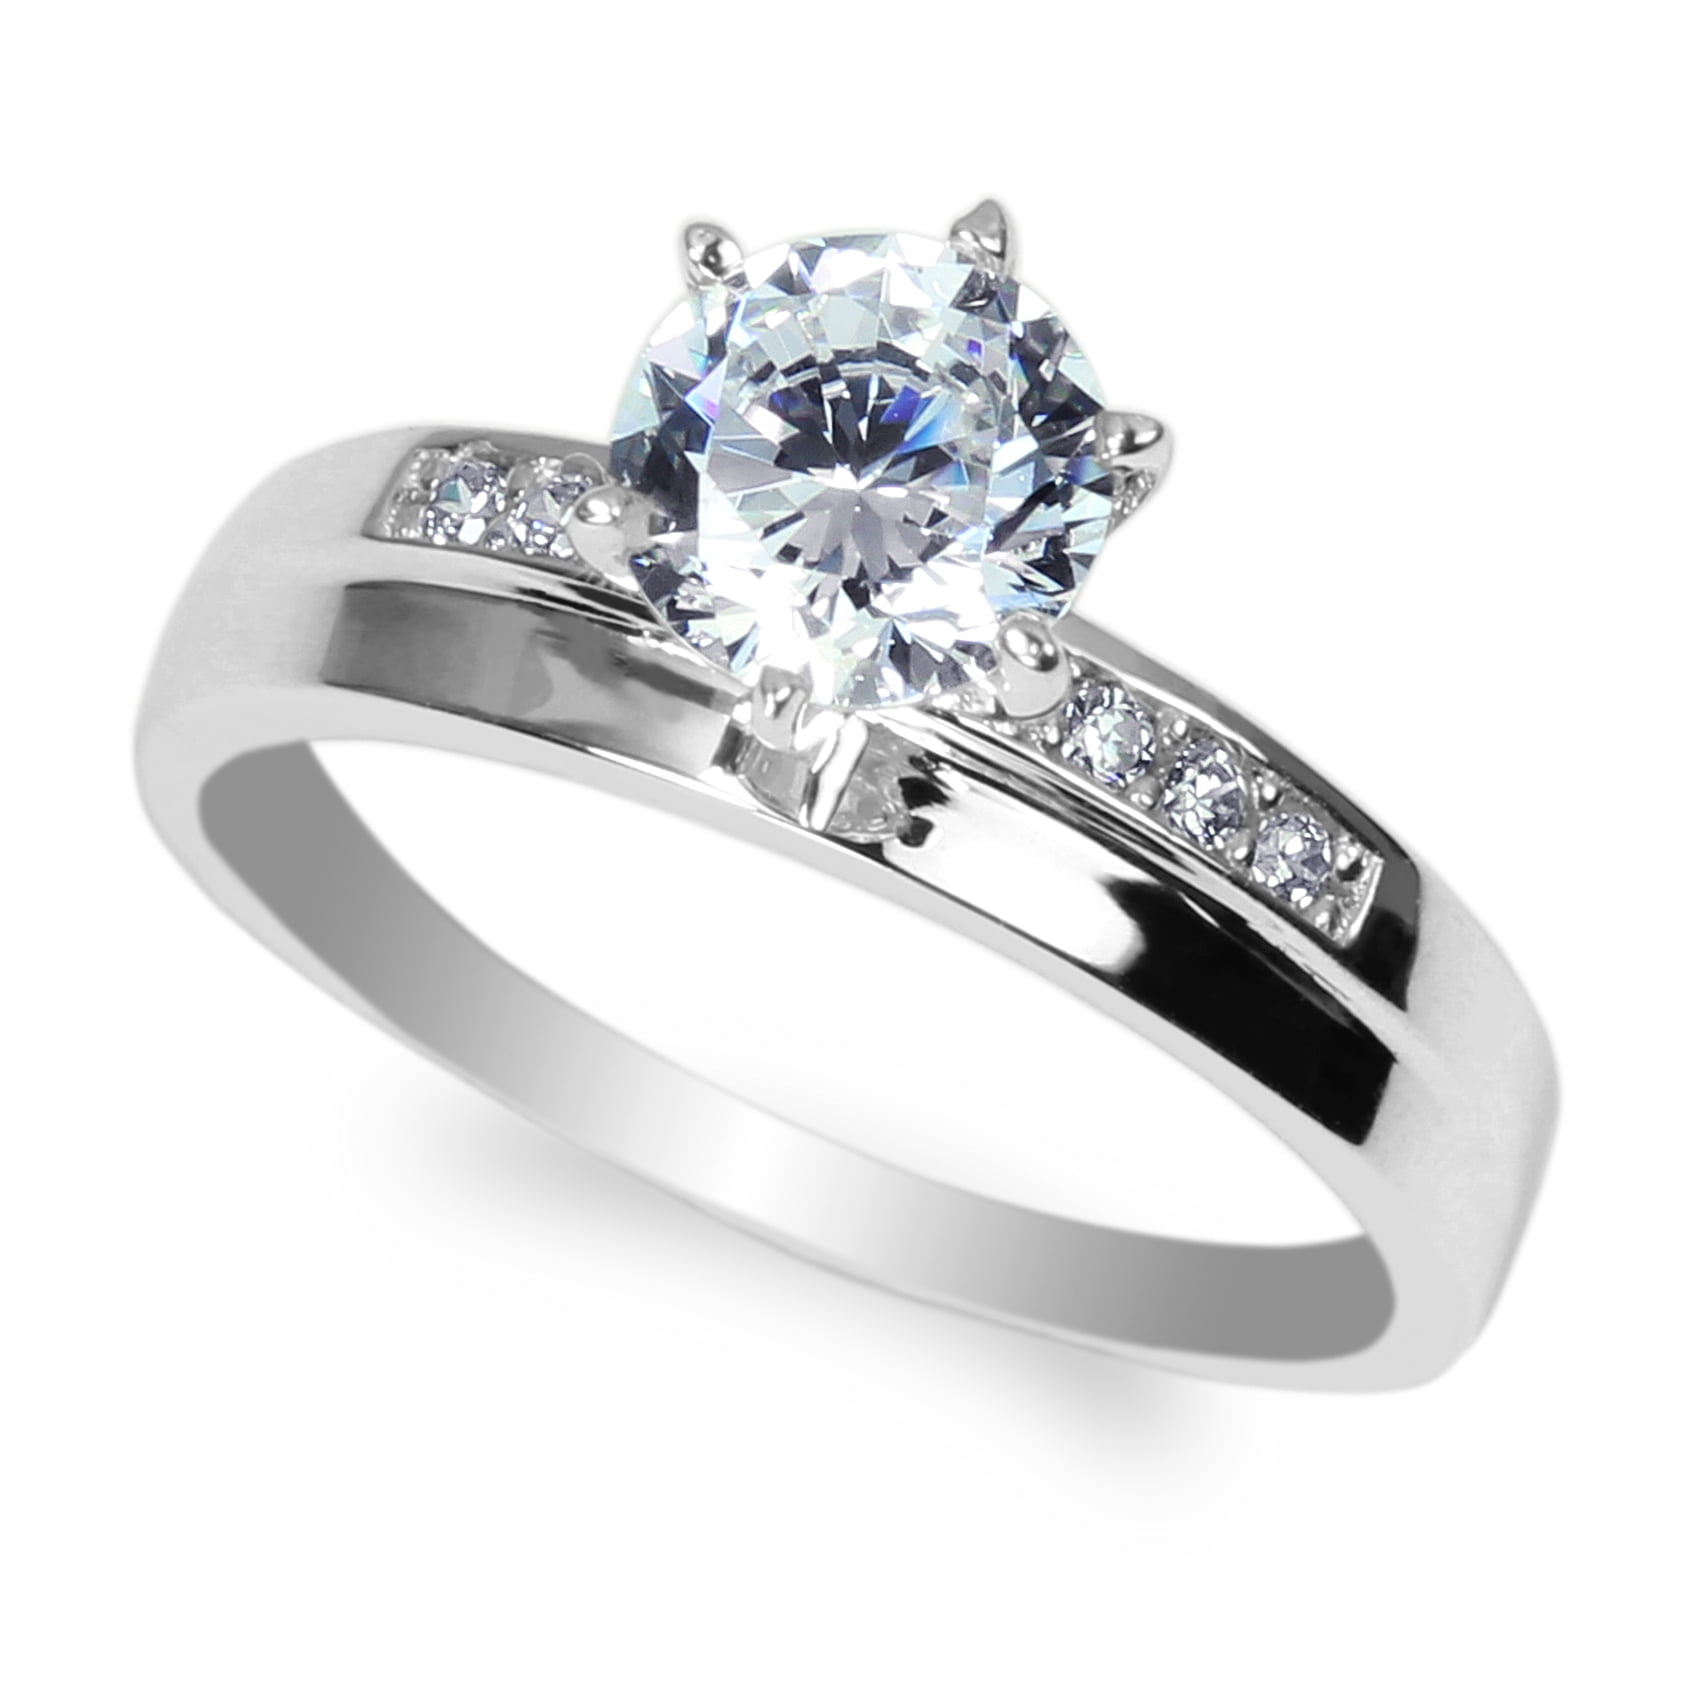 Details about   JamesJenny Ladies 10K/14K  White Gold     Engagement &Wedding Ring Size5-10 